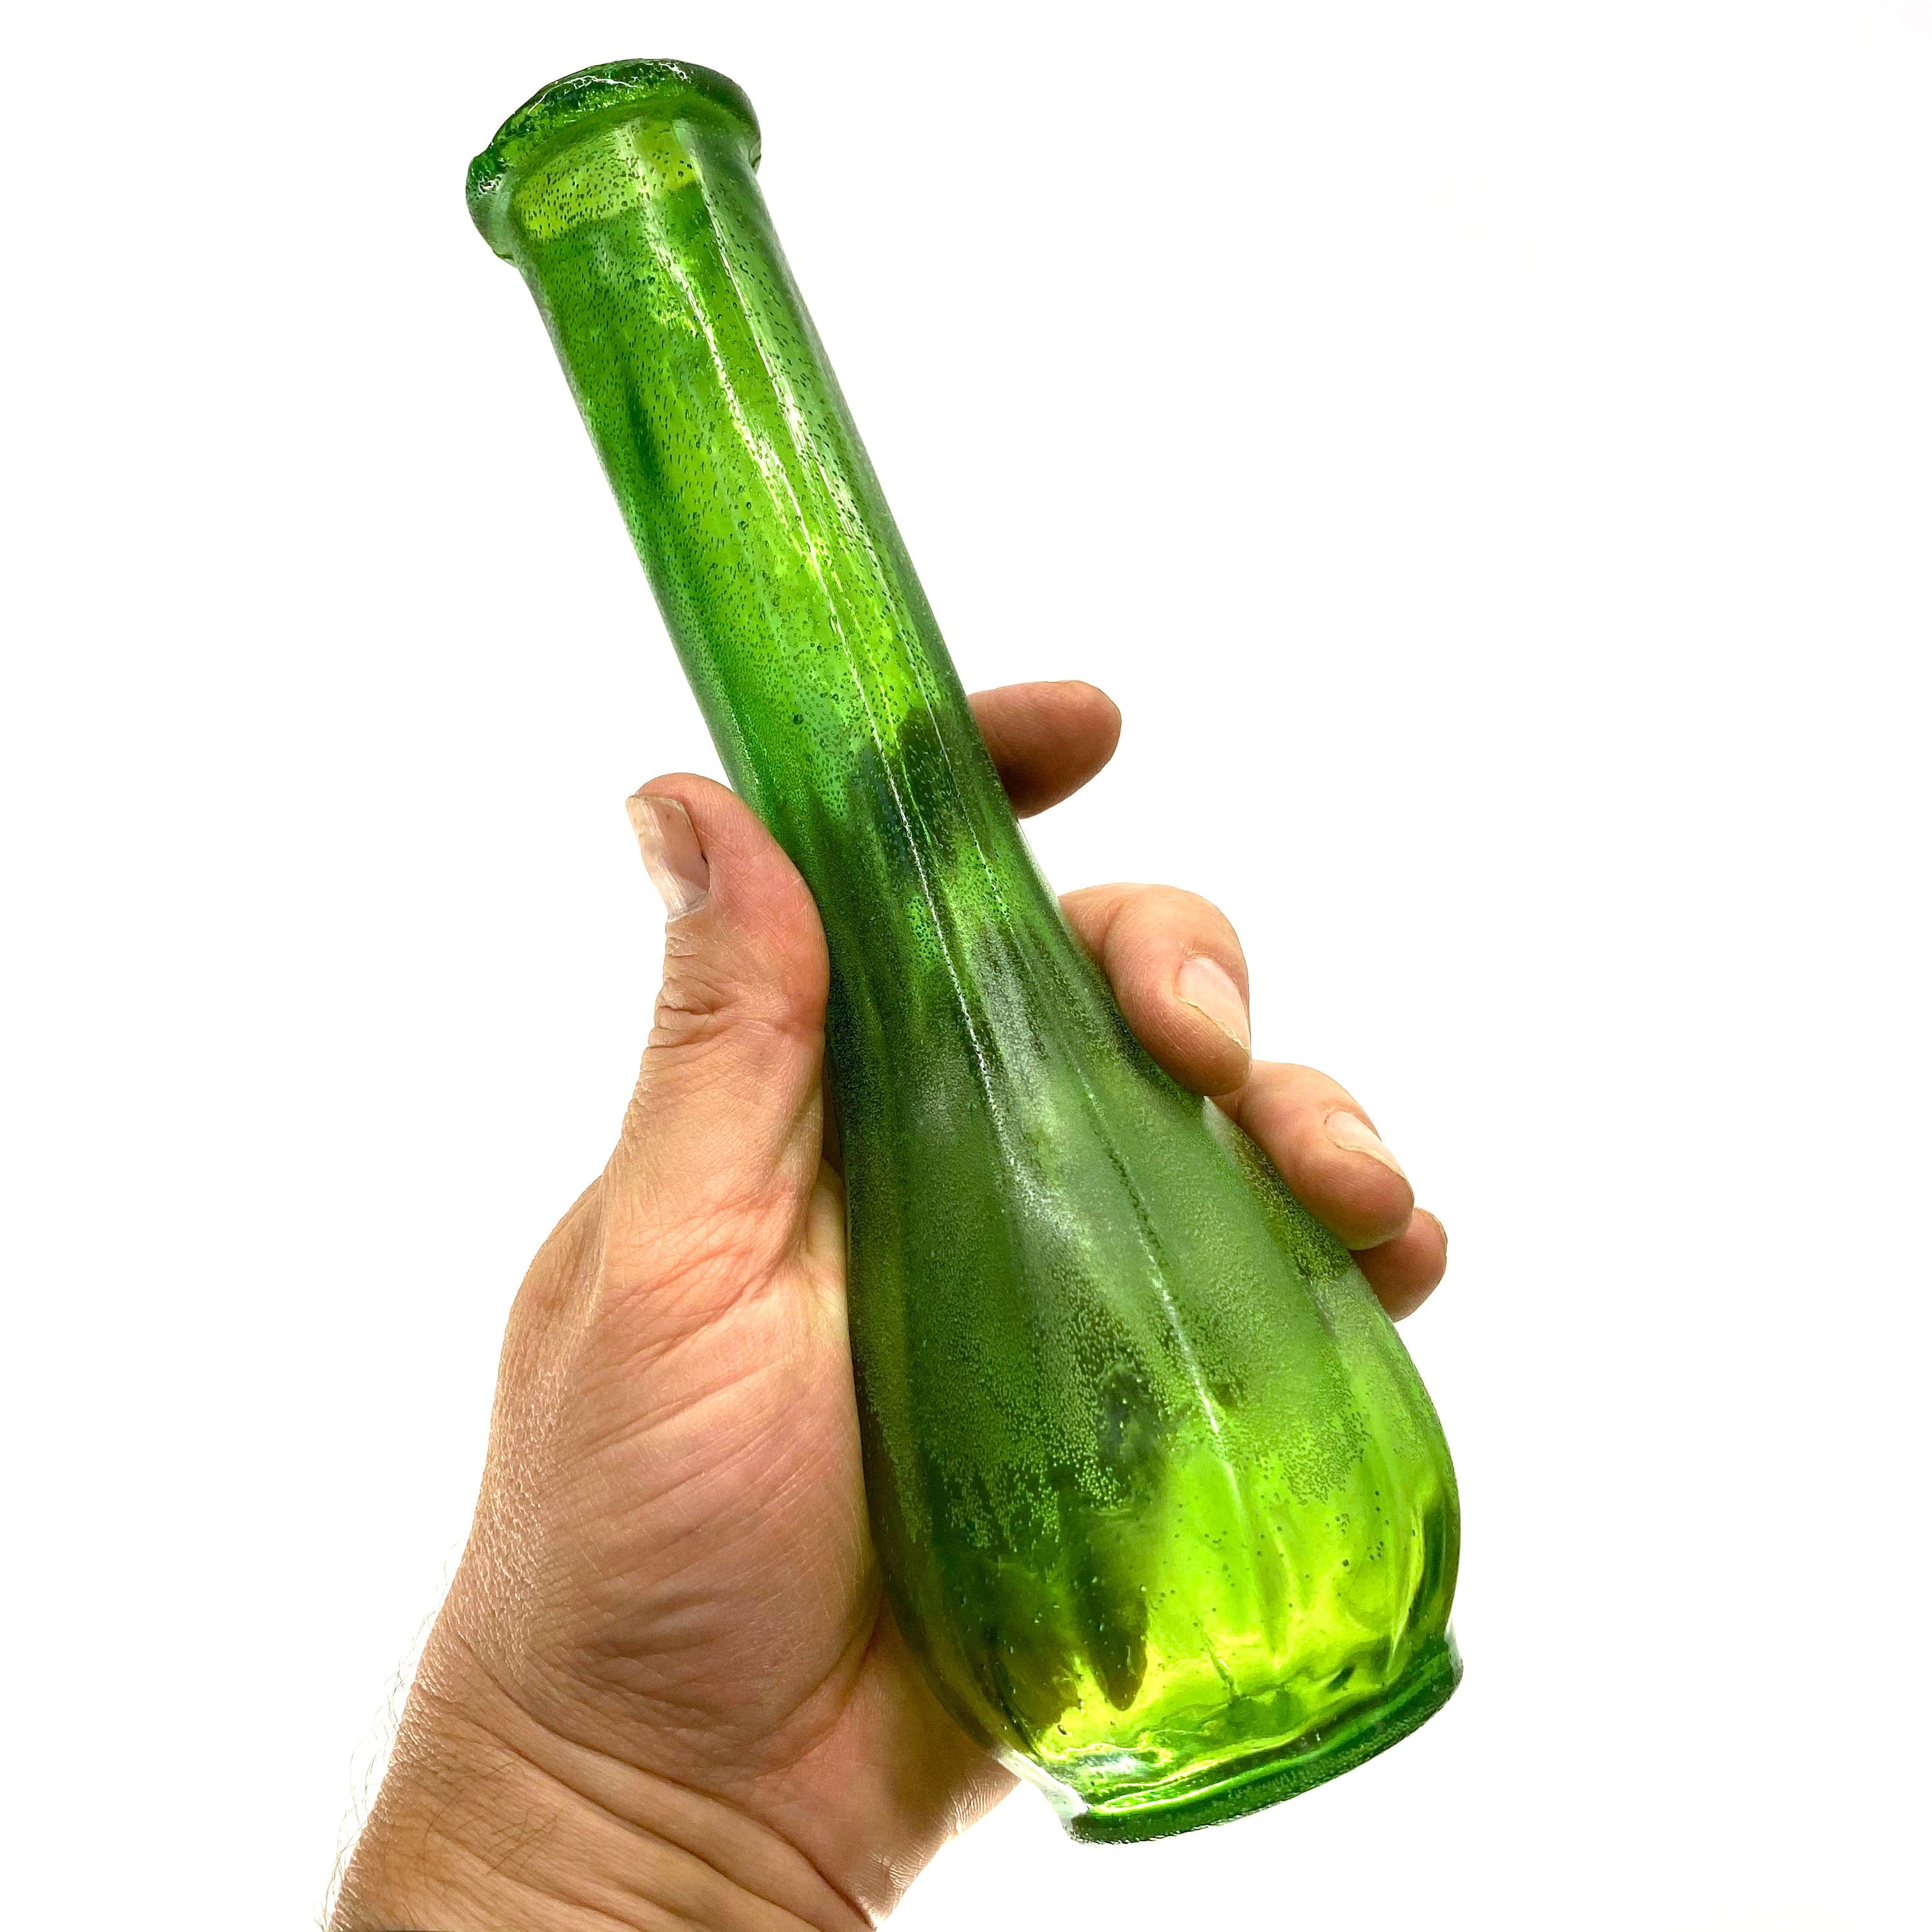 SMASHProps Breakaway Bud Vase - DARK GREEN translucent - Dark Green,Translucent